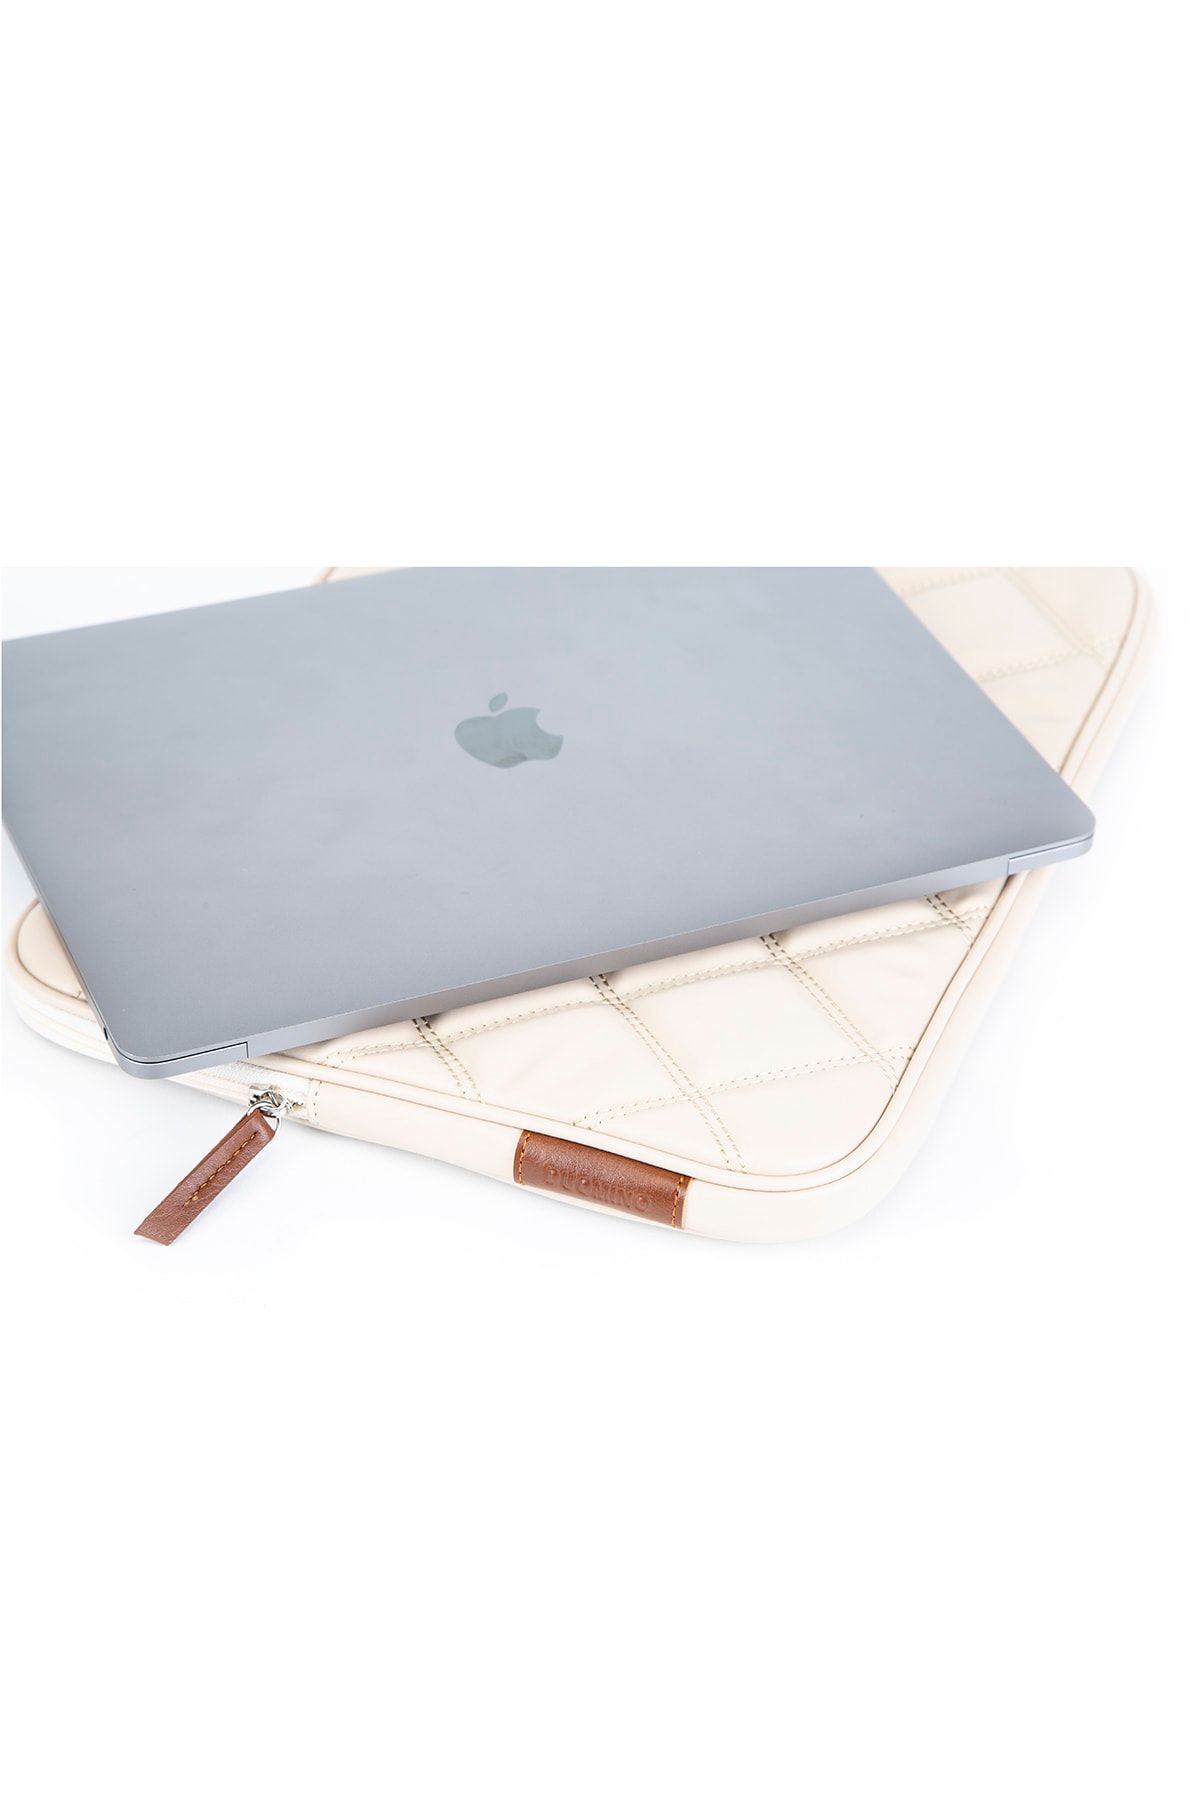 DUOMİNO Bej Laptop Tablet Kılıfı 14 inç - 16 inç MacBook iPad Pro Air Huawei/Dell/Asus Evrak Çantası